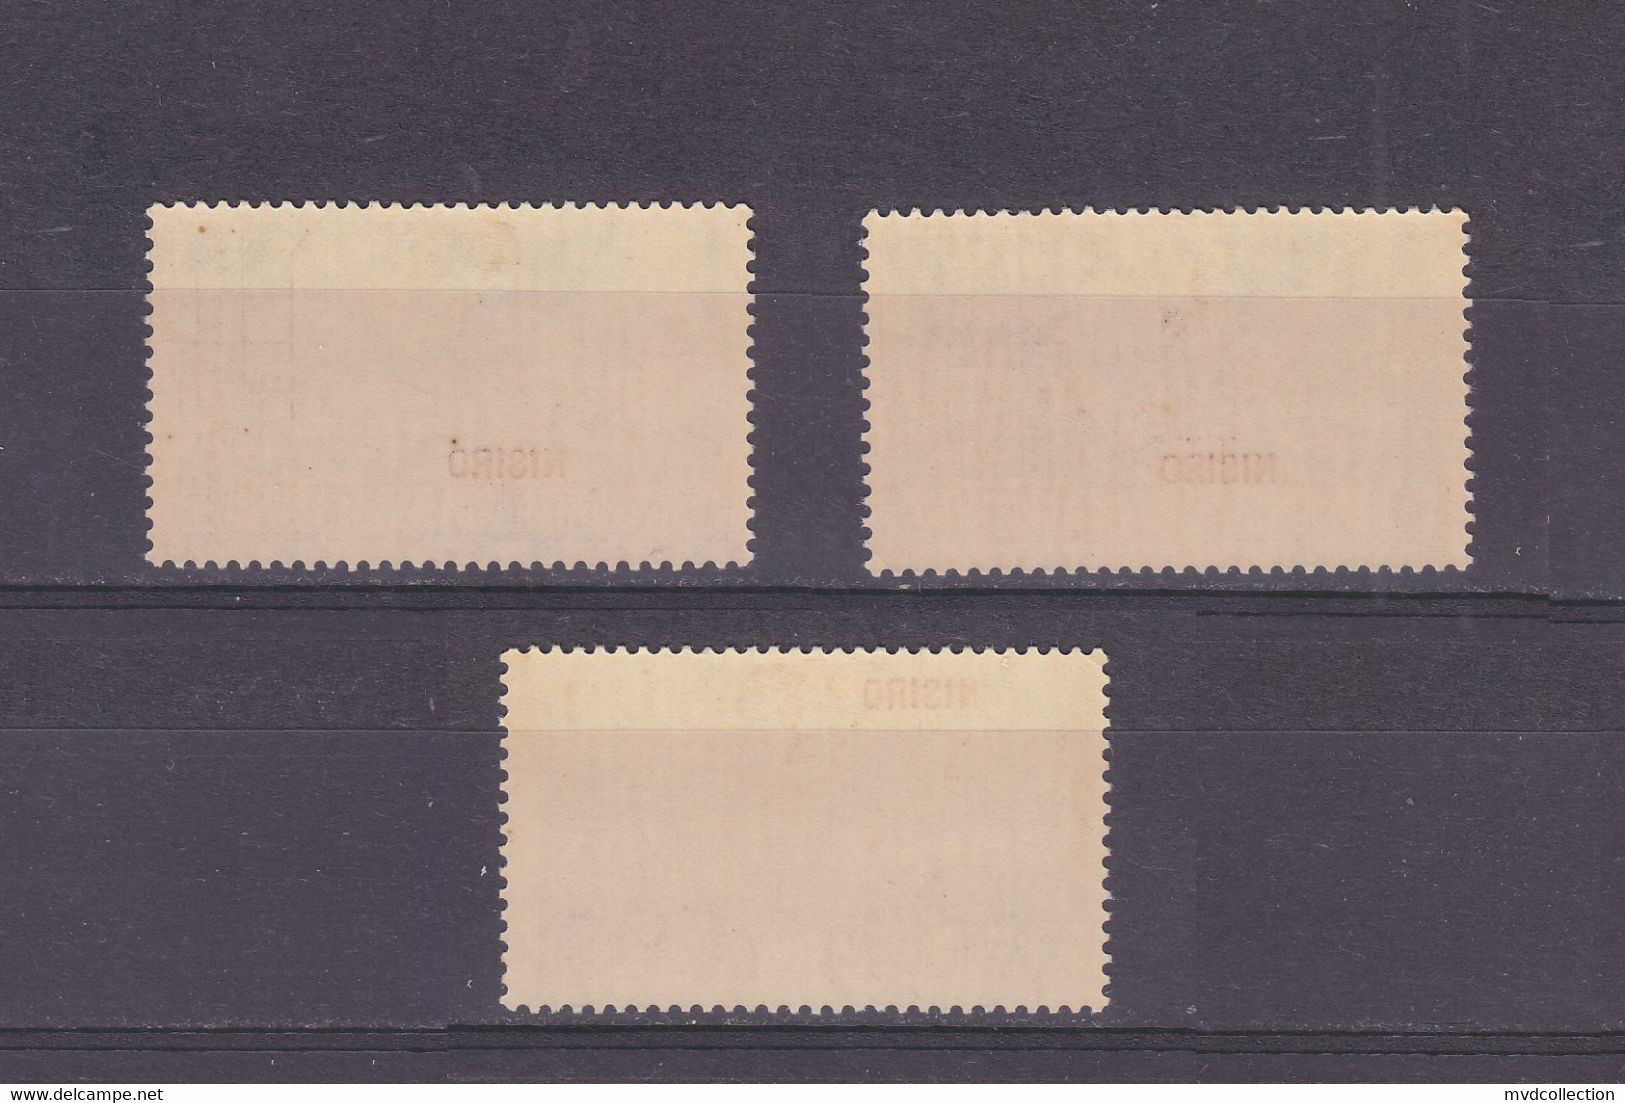 ITALY Lot CENTENARIO FERRUCCI Stamps Overprinted NISIRO 1930 VF MH Original Gum - Egée (Nisiro)